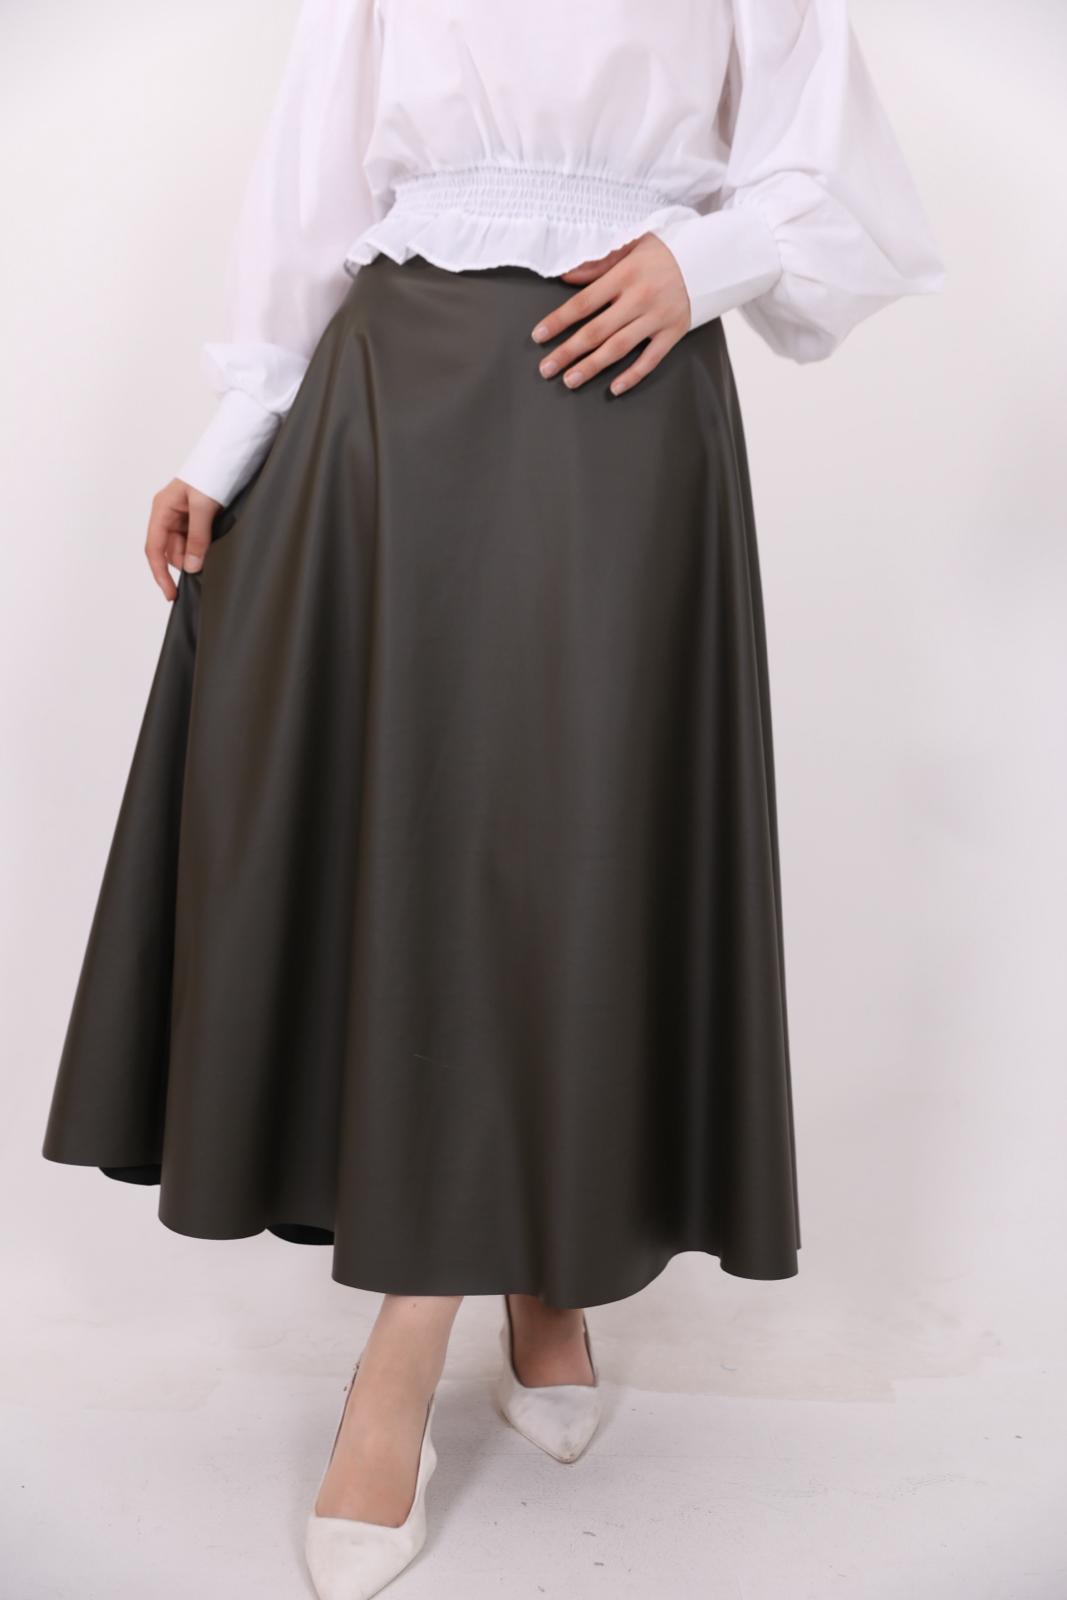 Kiloş Leather Skirt Green